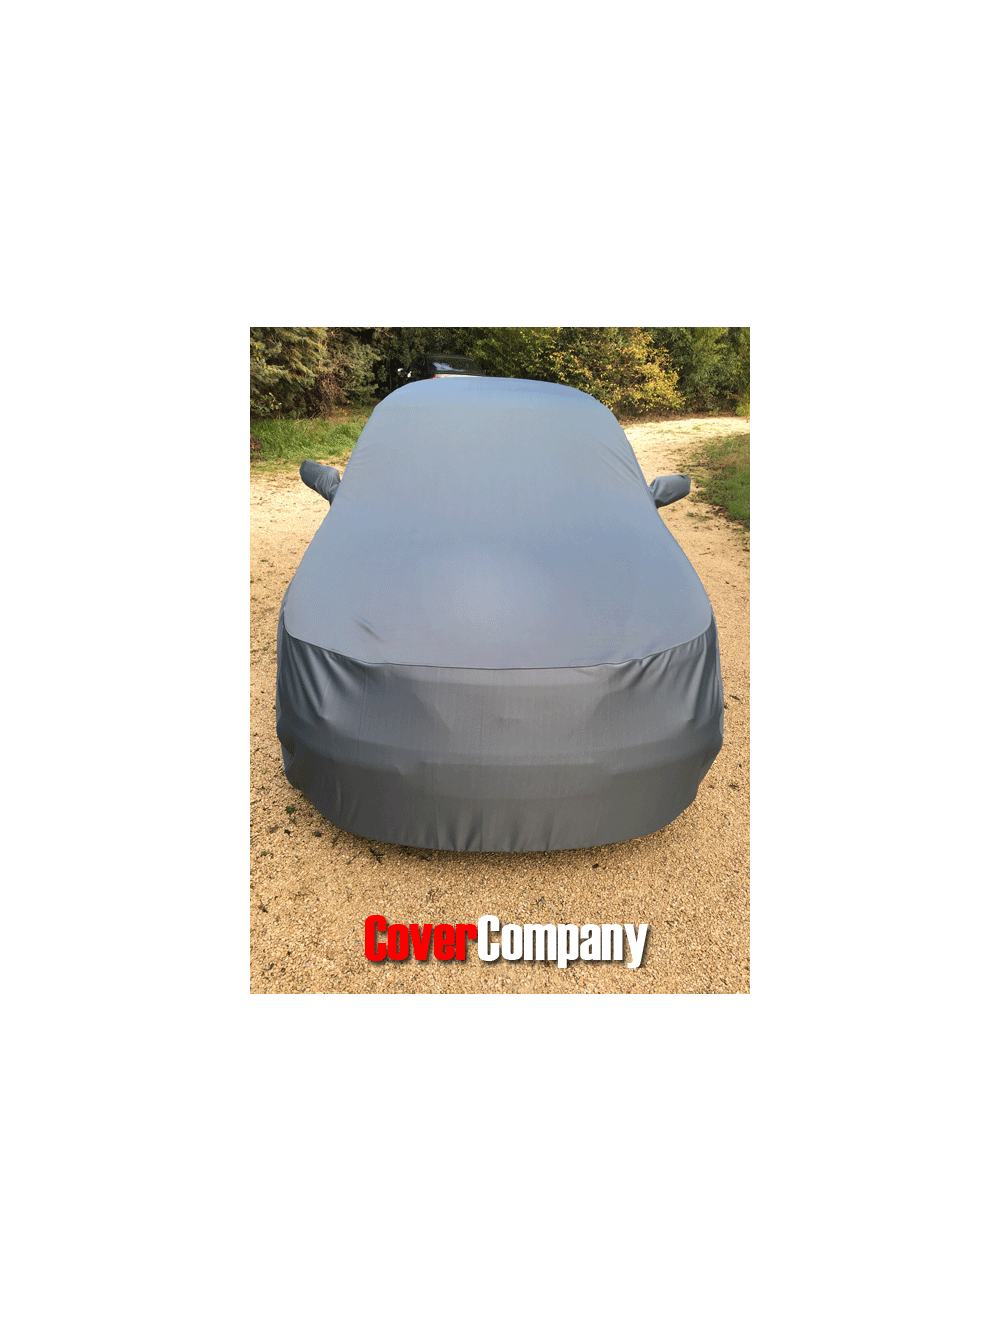 Rainproof Custom Car Cover for Saab - Outdoor Platinum Range